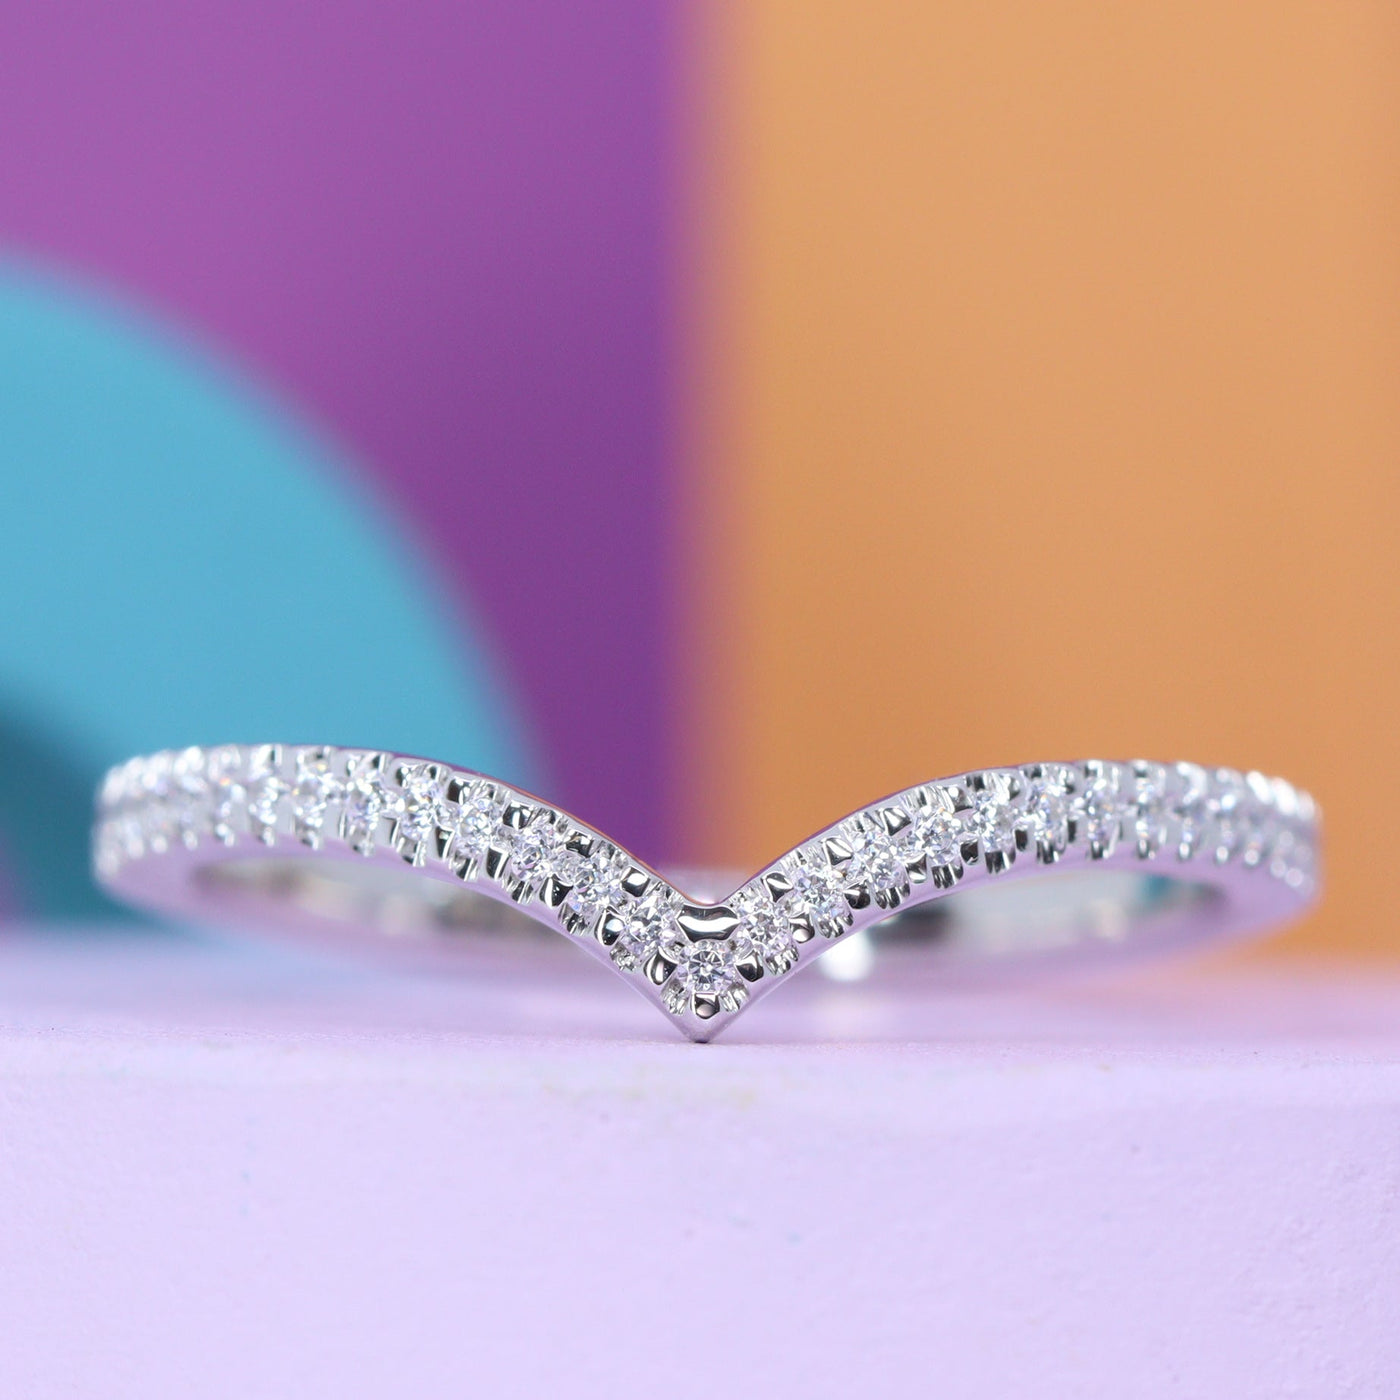 Rebecca & Ellis - Bridal Set - Teal Sapphire Ring with Diamond Set Shoulders and Diamond Set Wishbone Wedding Ring - Made-to-Order